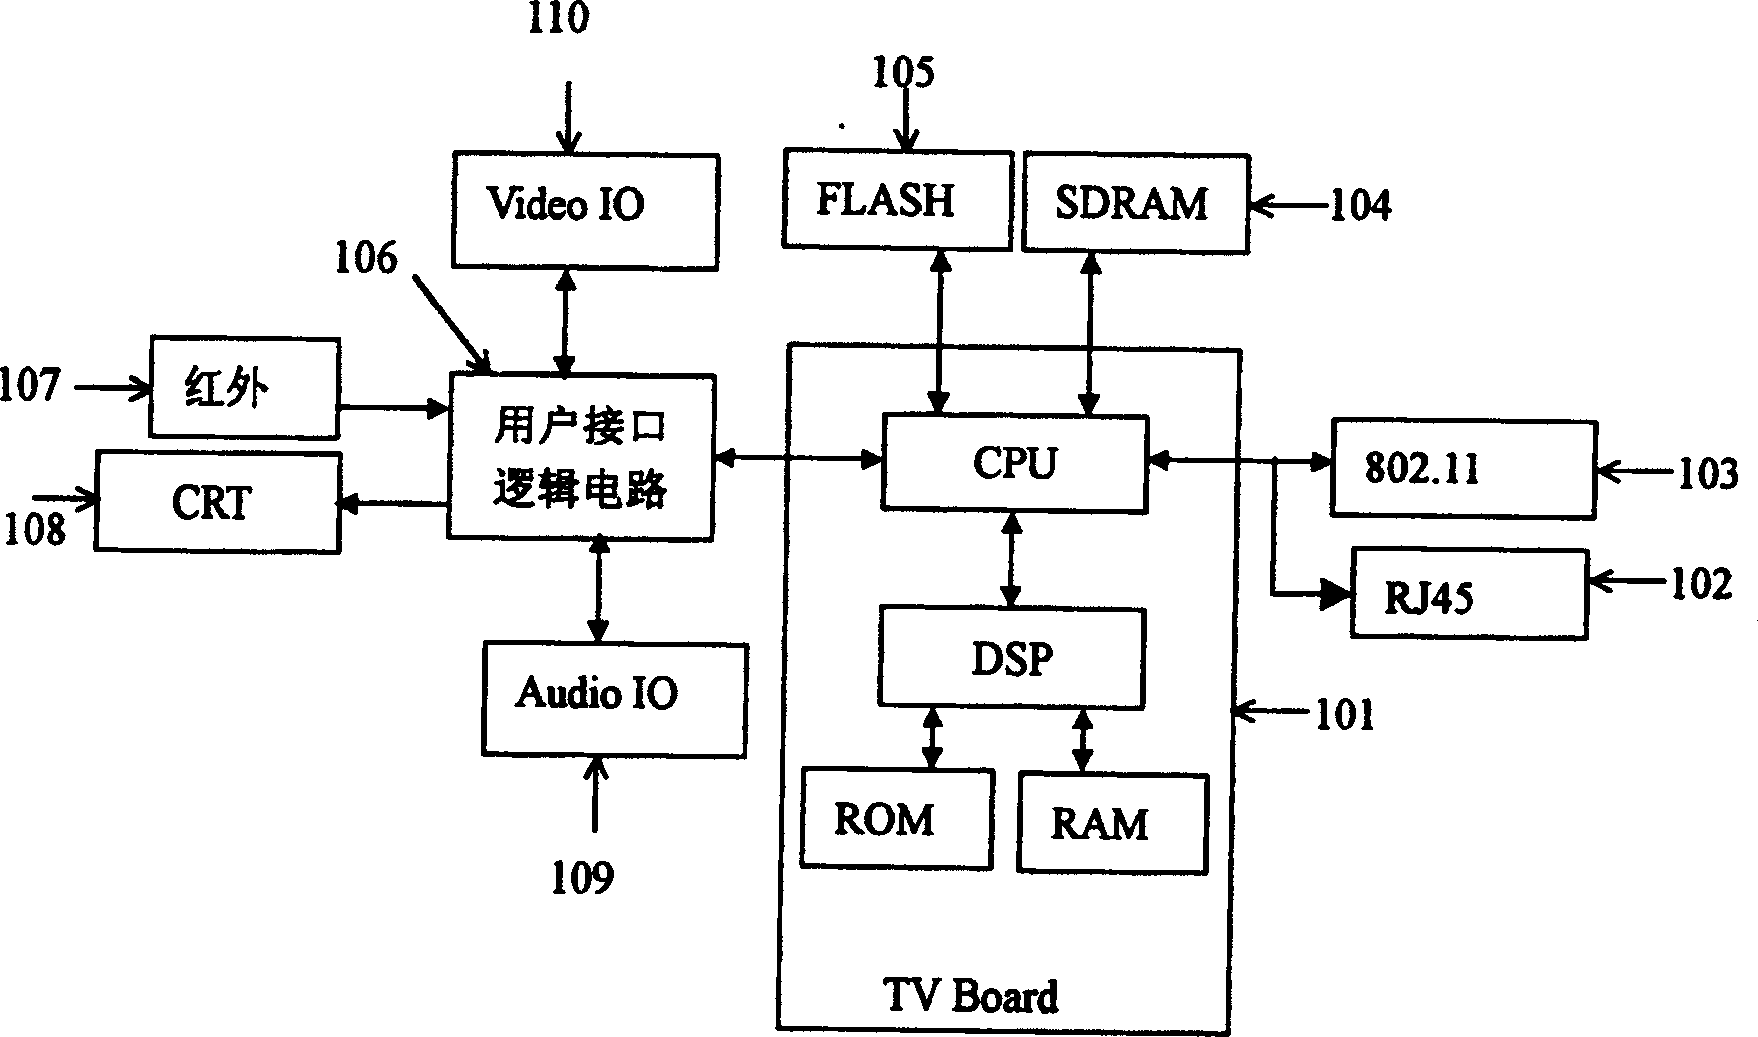 Network multi-media TV set based on UPNP protocol